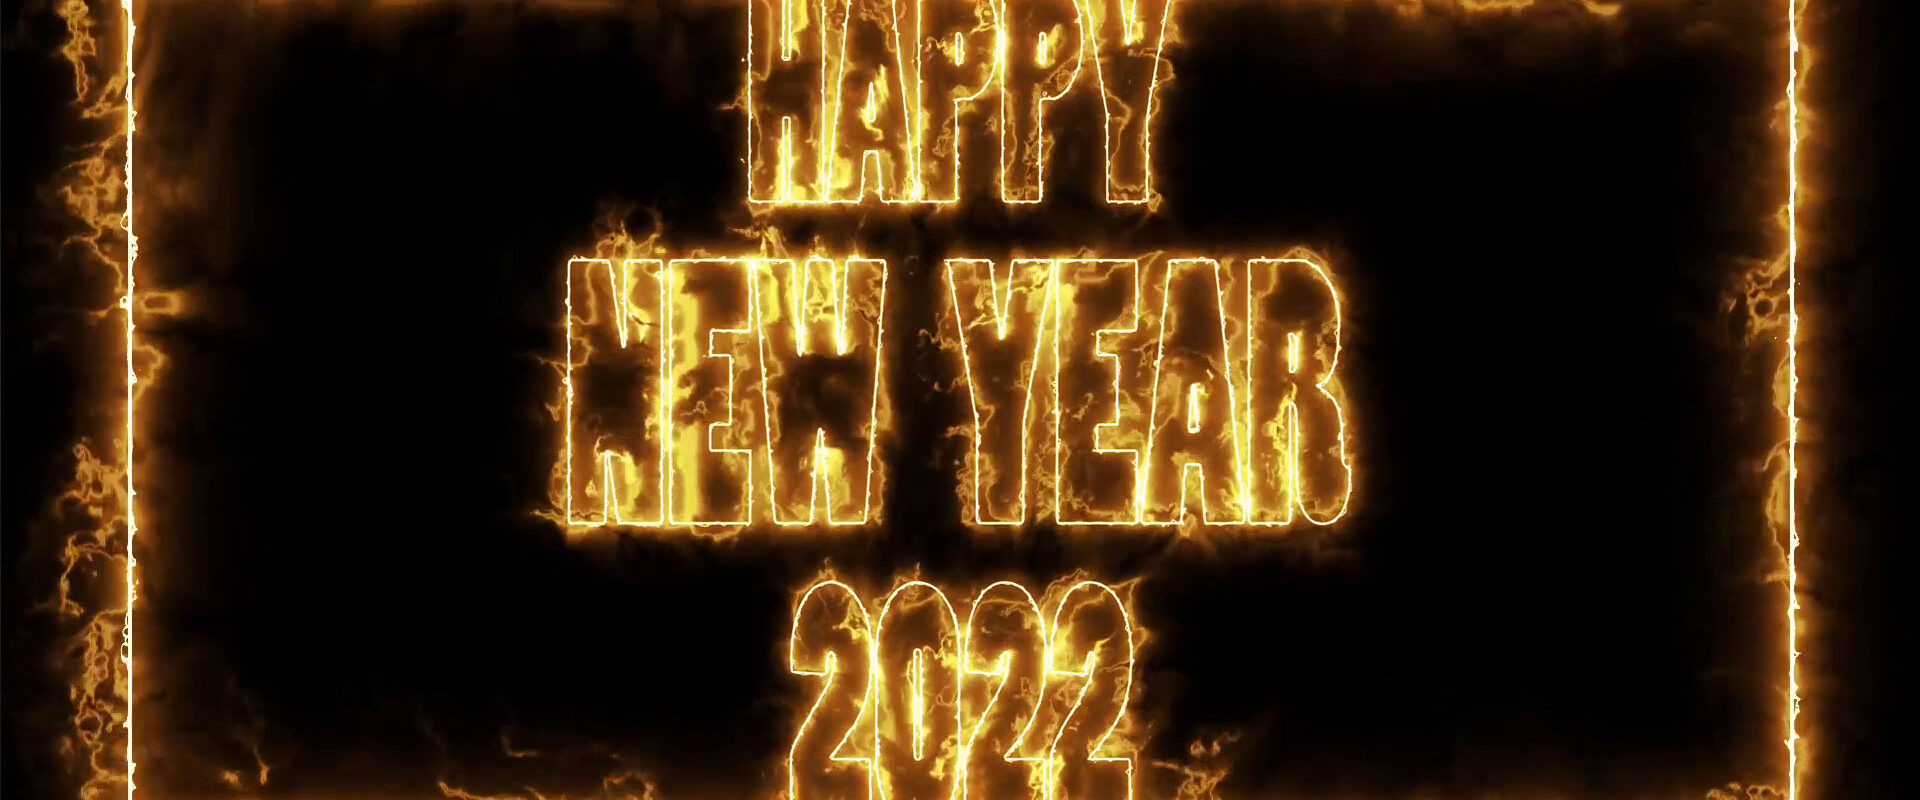 Happy New Year 2022 Fire Blaze Frame Animation on Black Background